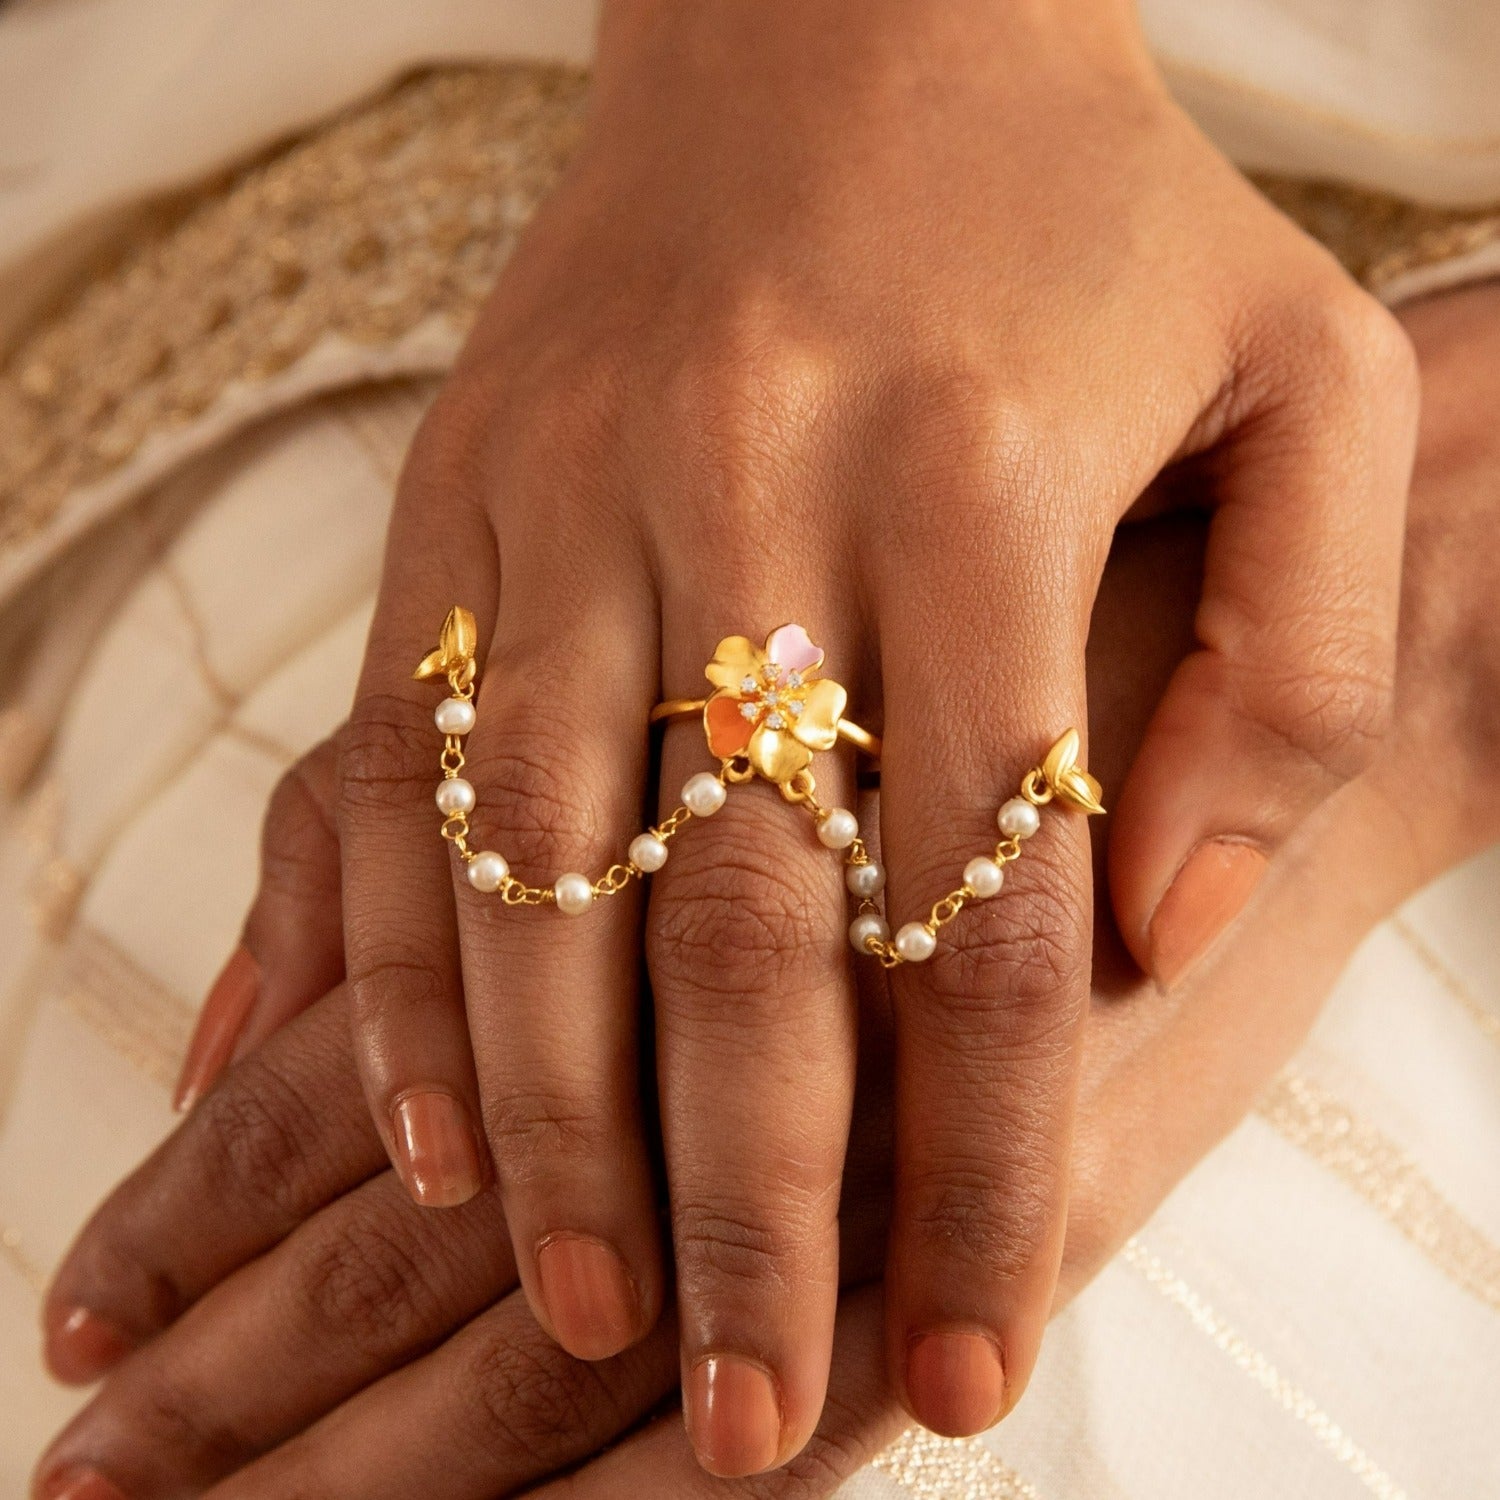 Antique Rings - Buy Antique Rings online in India